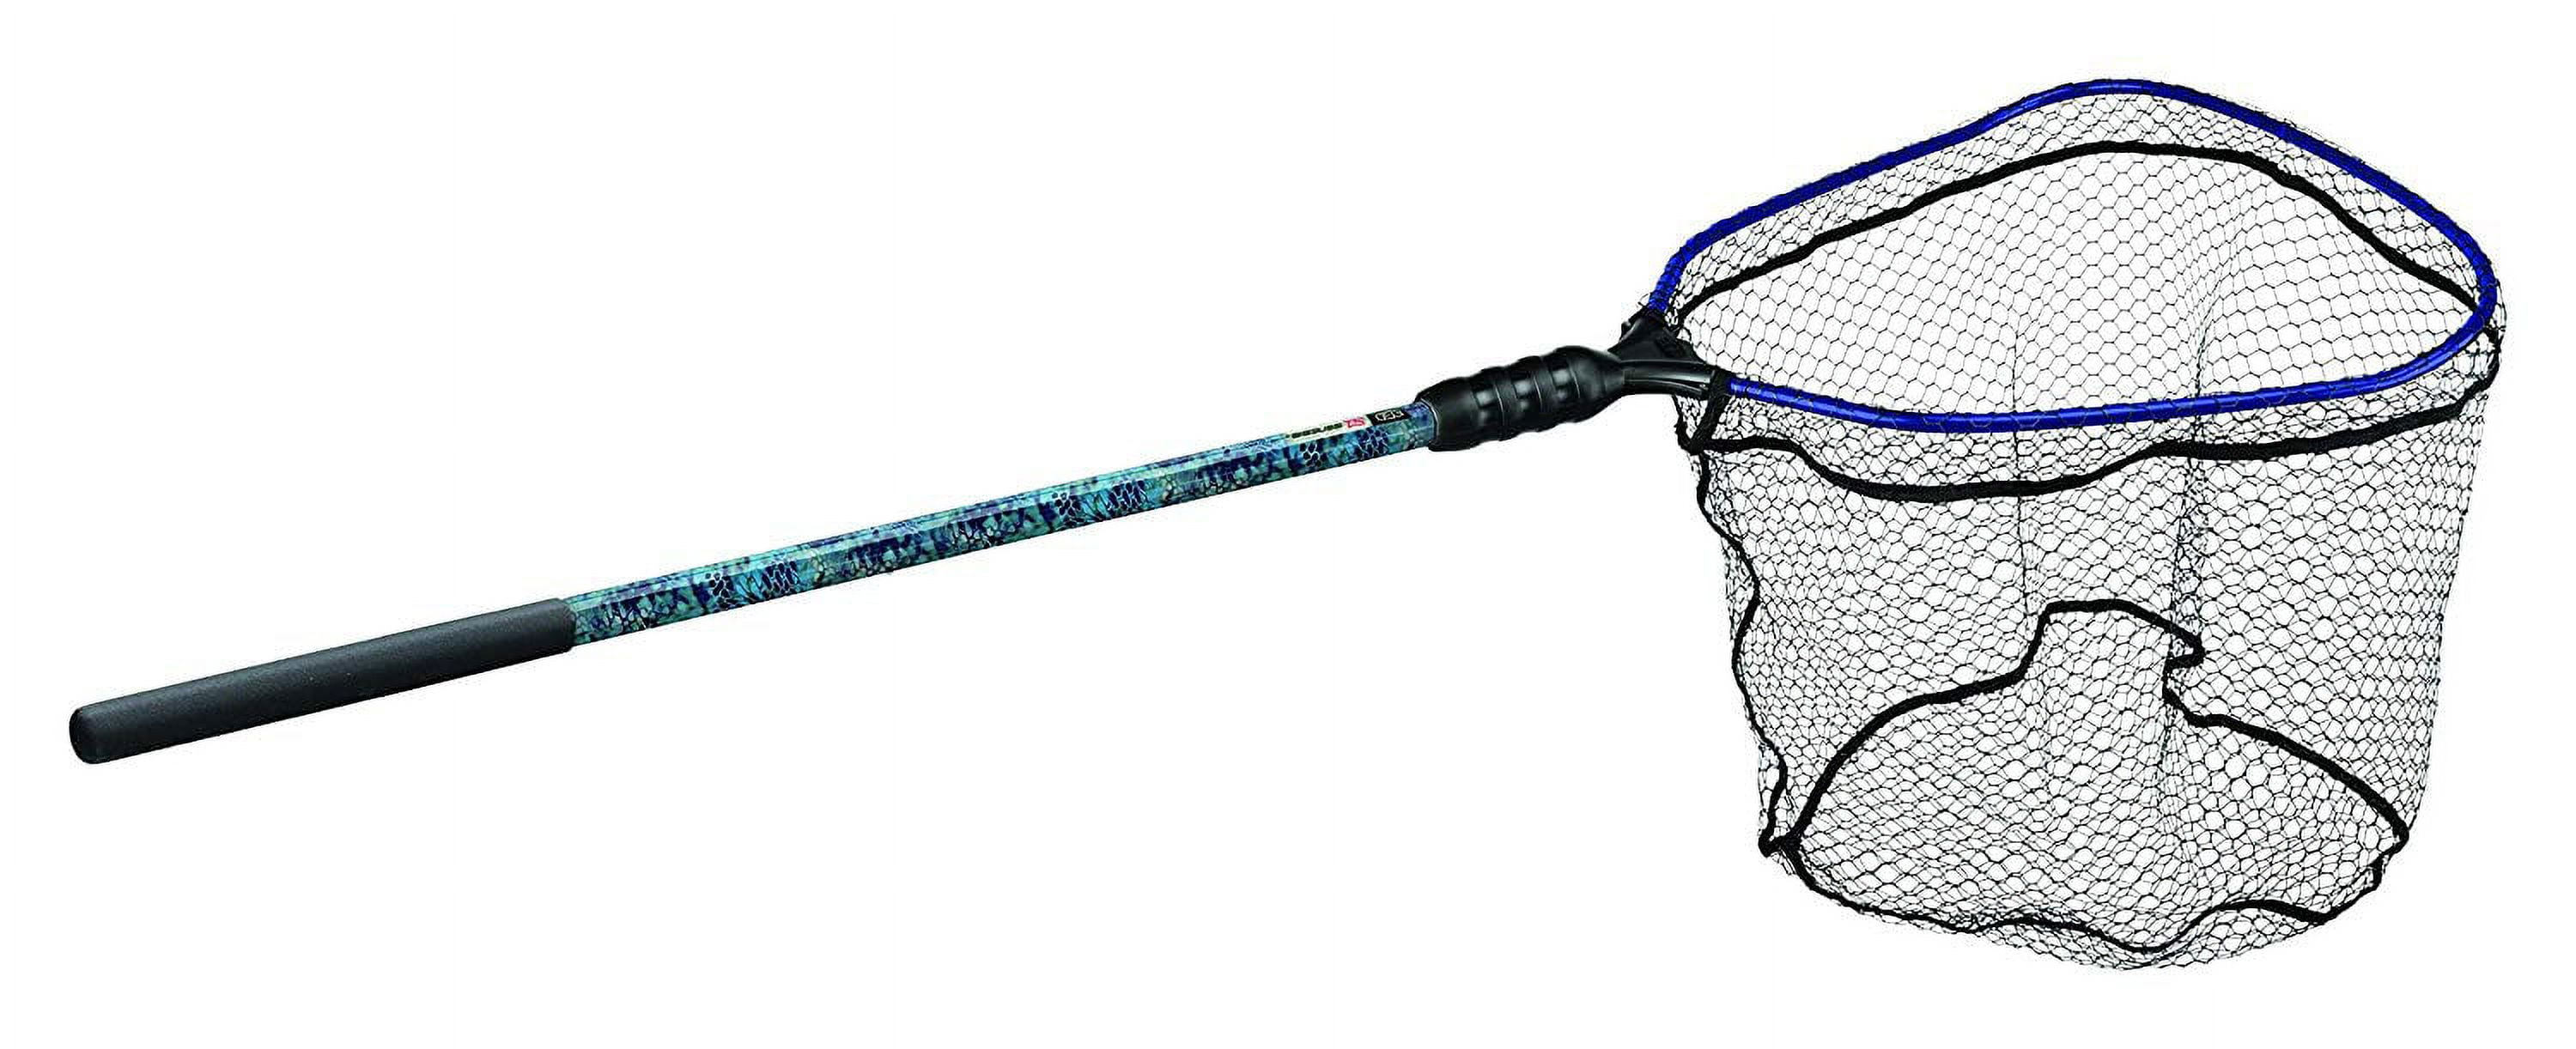 EGO 75151 Kryptek S1 Genesis Large Landing Net Fishing Nets 31 